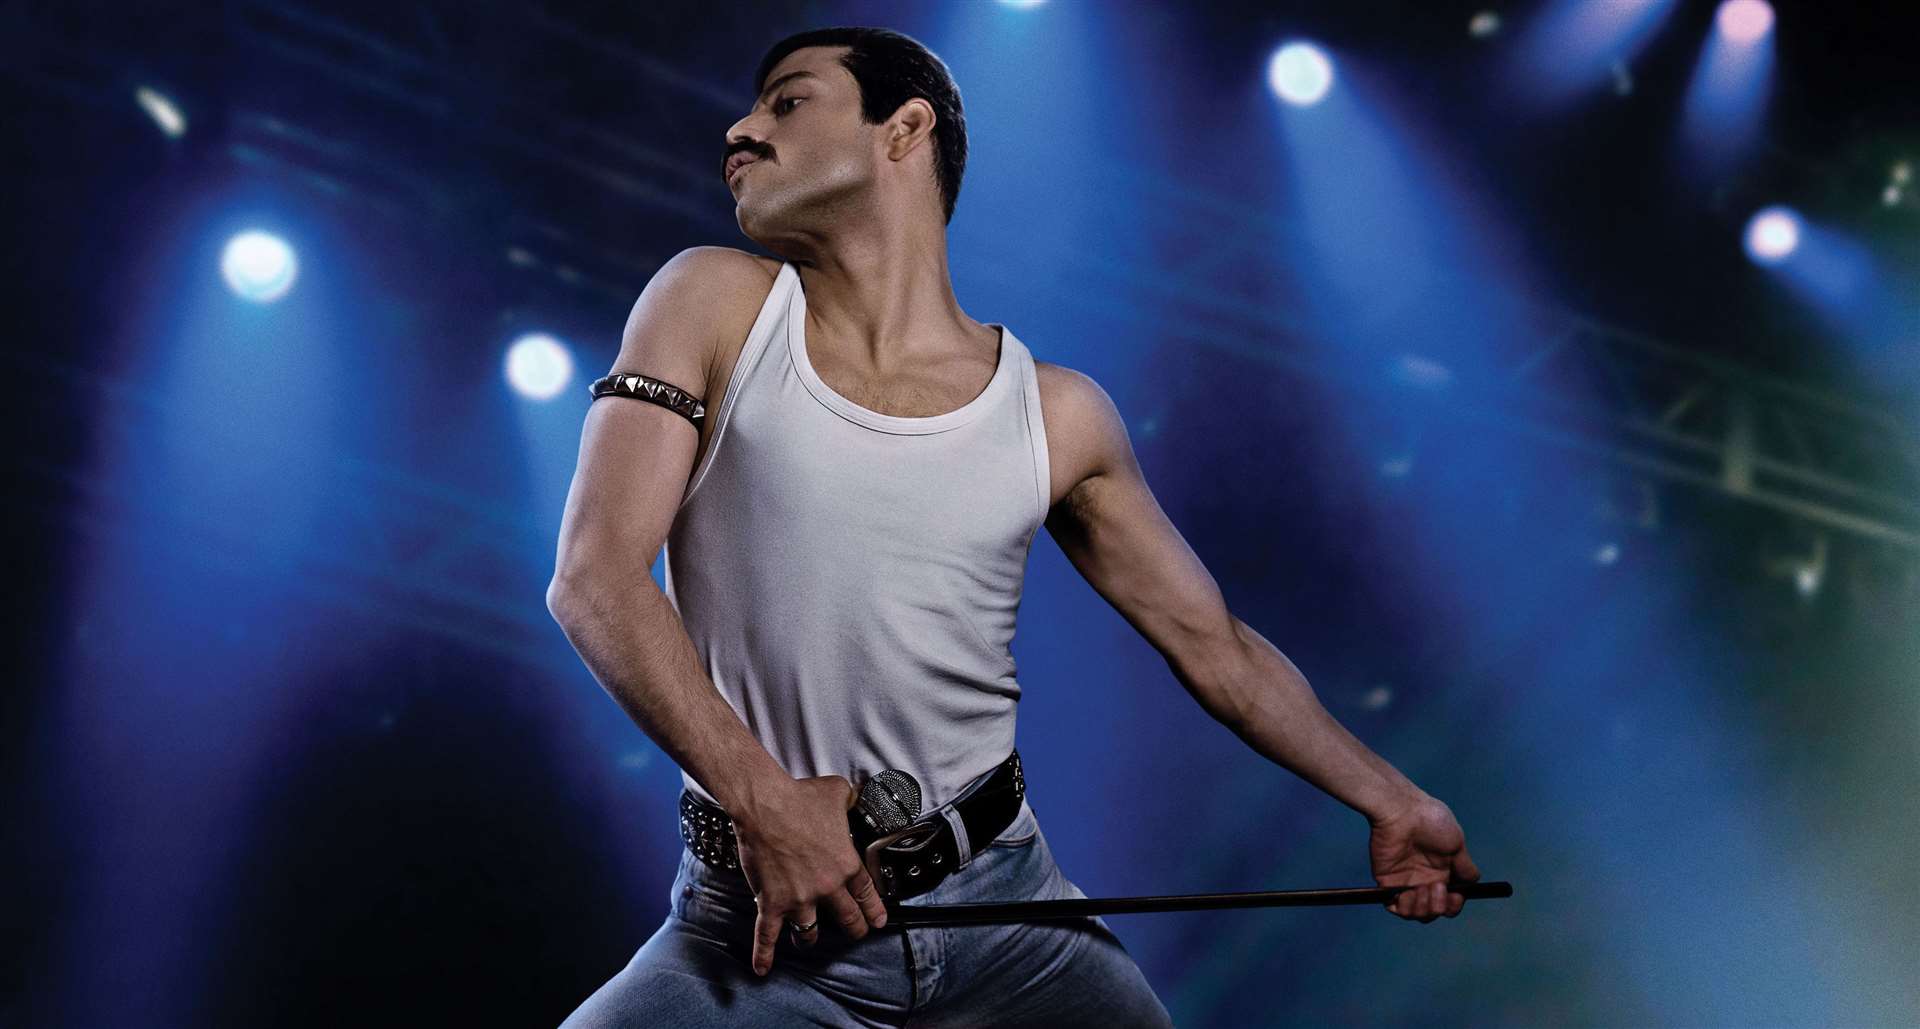 Bohemian Rhapsody, starring Rami Malek, will be screened in Kent